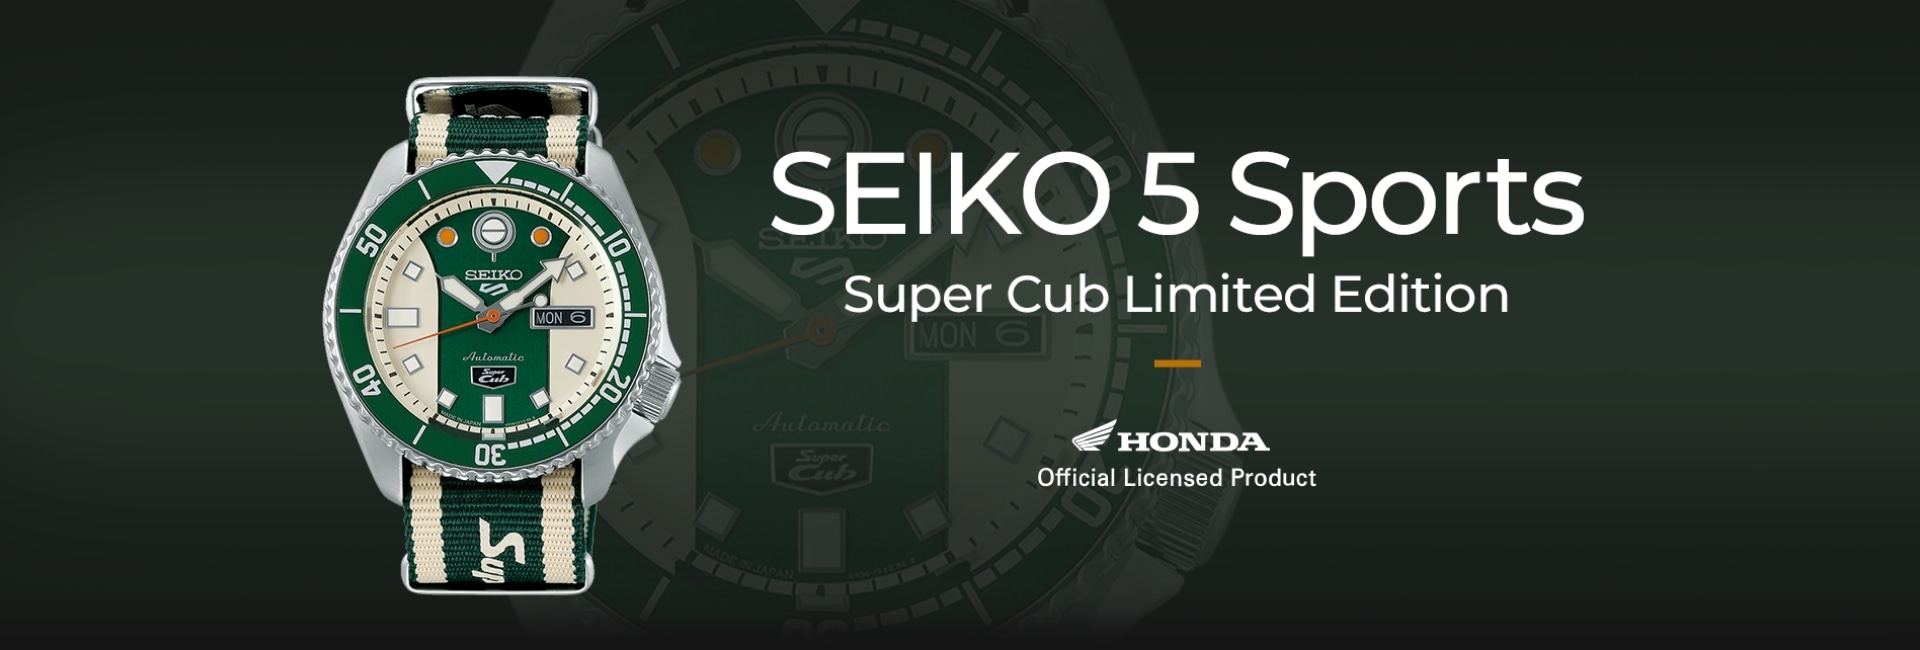 SEIKO 5 Sports Super Cub Limited Edition｜HondaGO BIKE GEAR